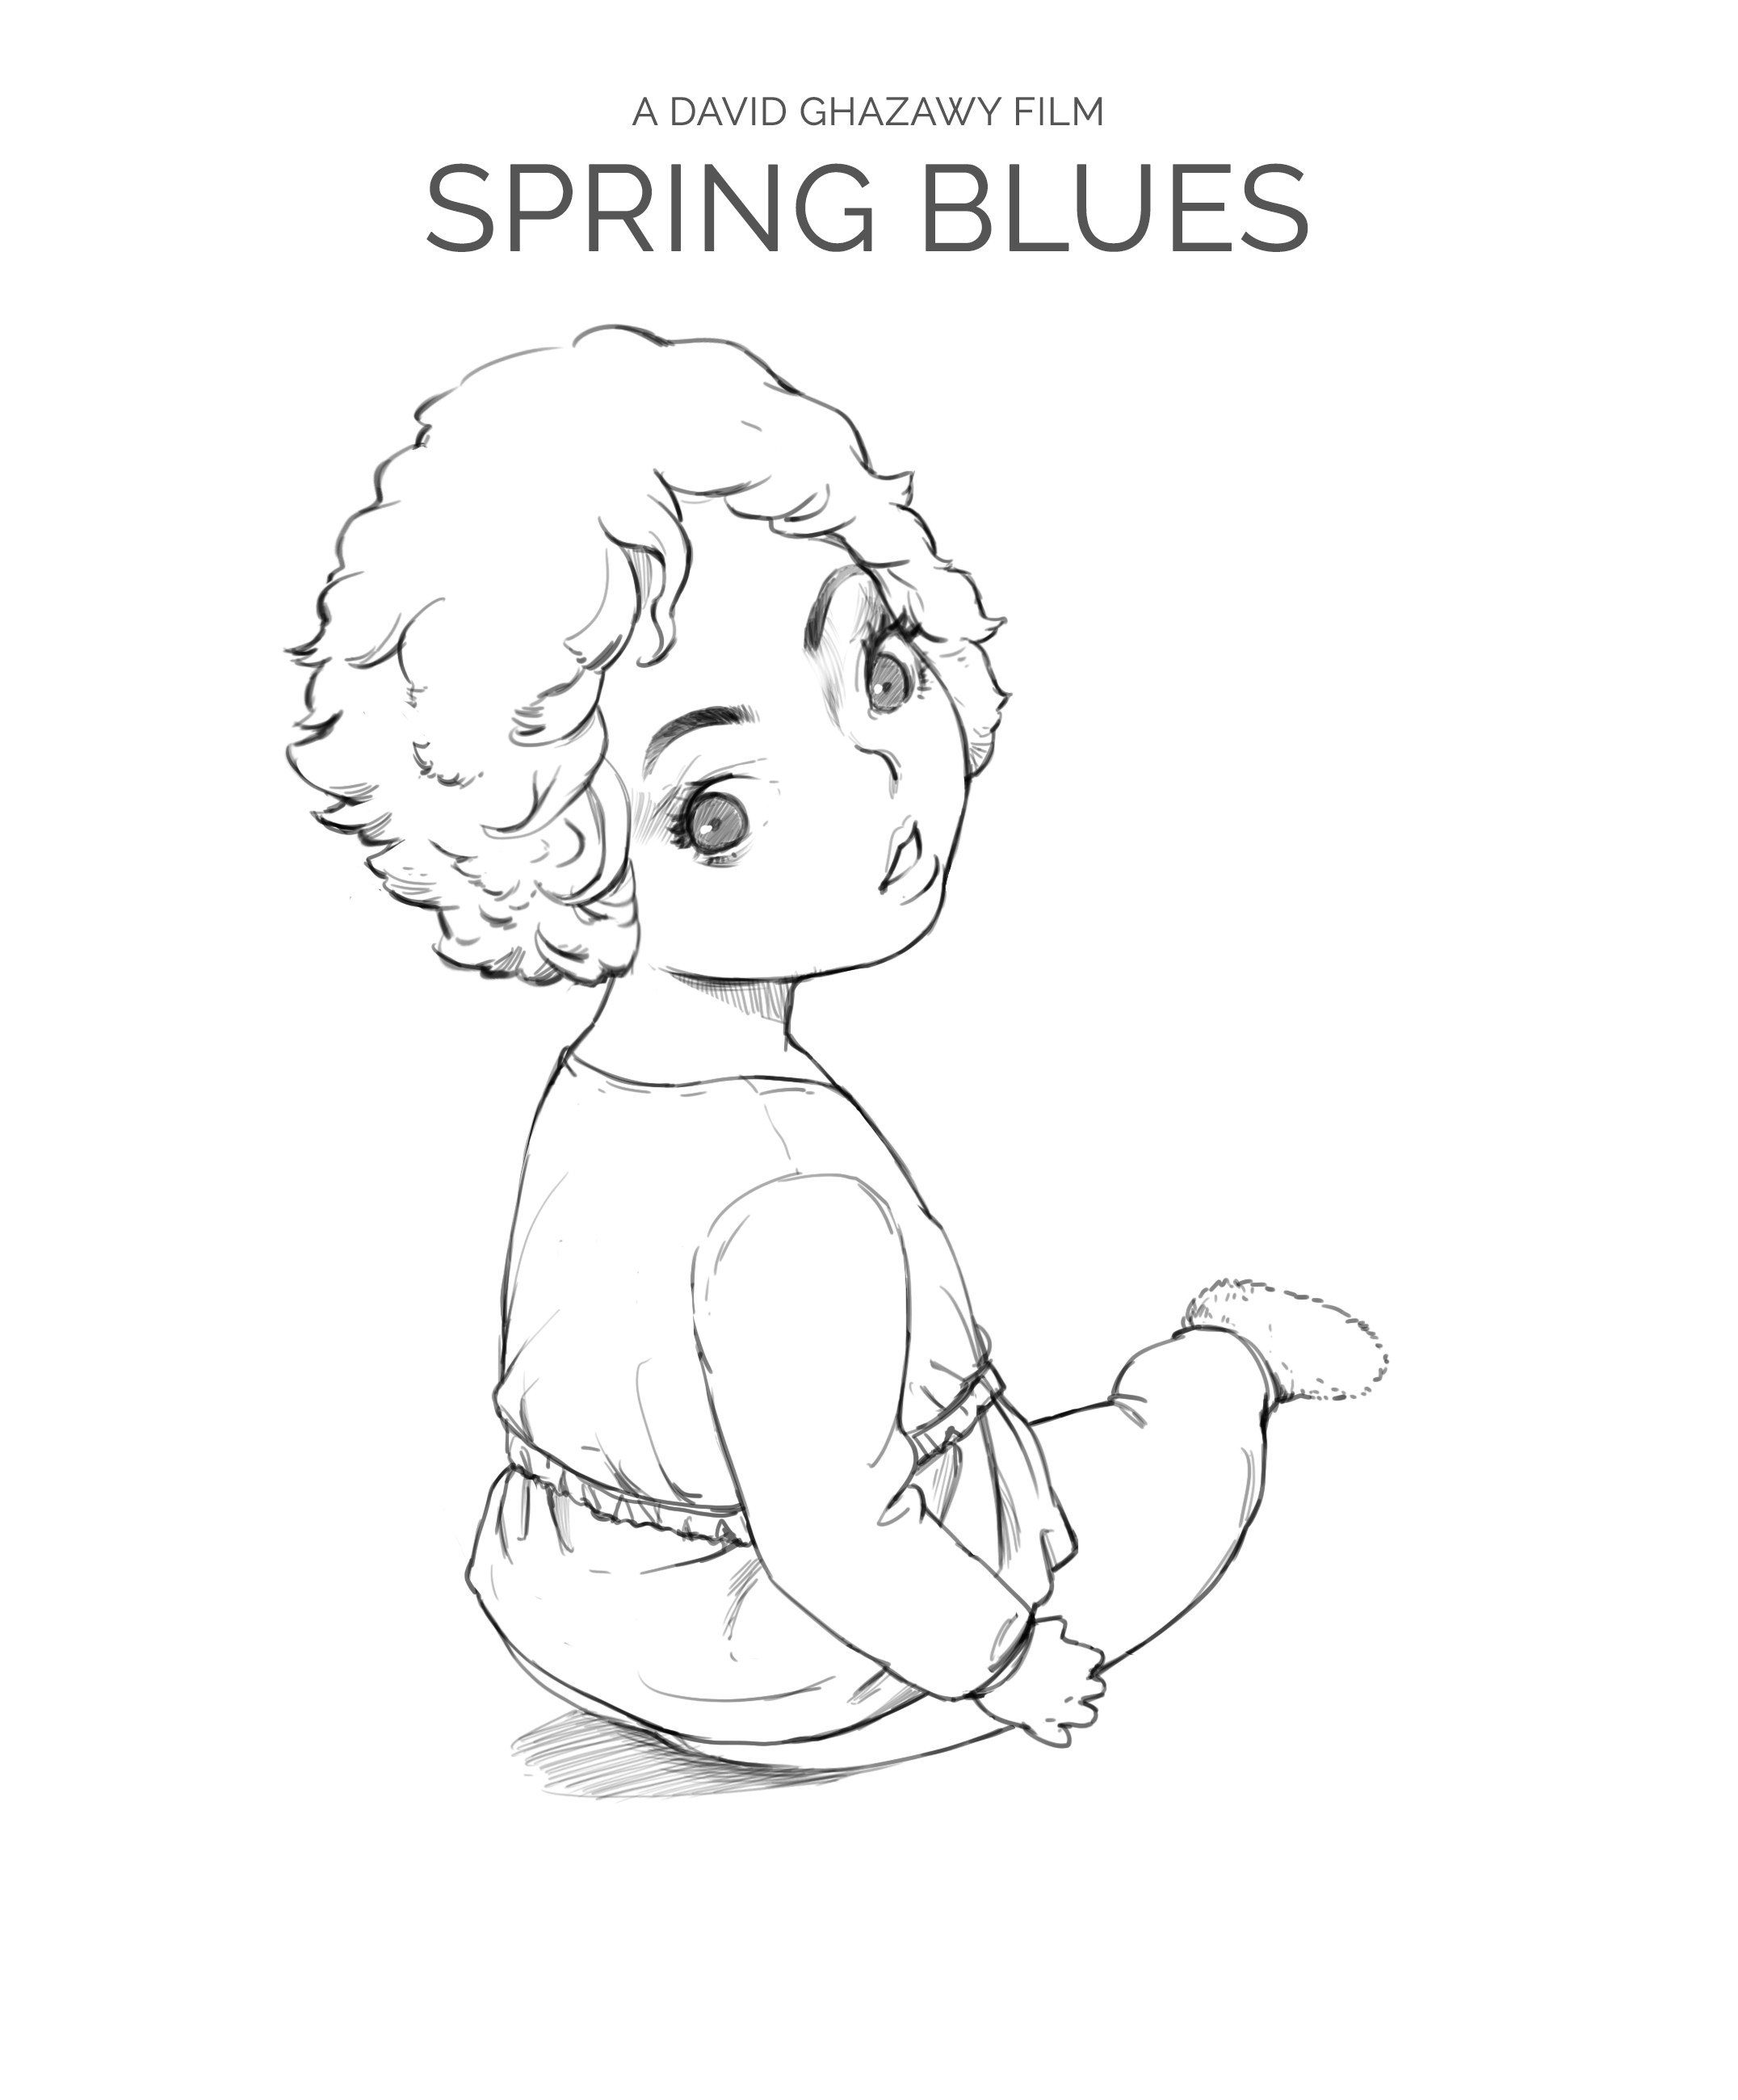 Spring Blues Film: Shy Sweet Child